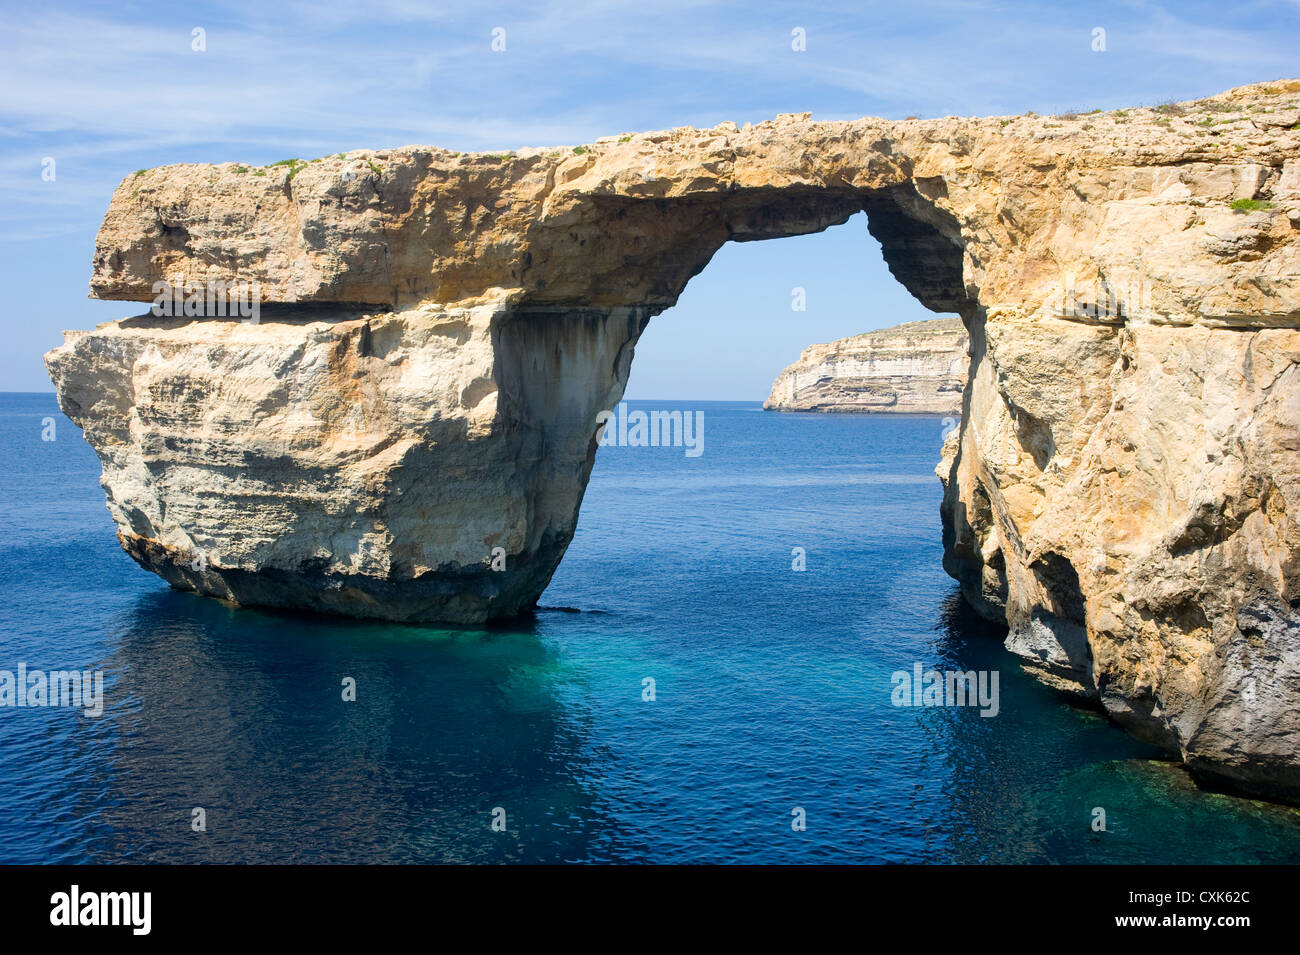 The crystal clear waters around the Azure Window, Gozo Island, Malta. Upright shot. Stock Photo